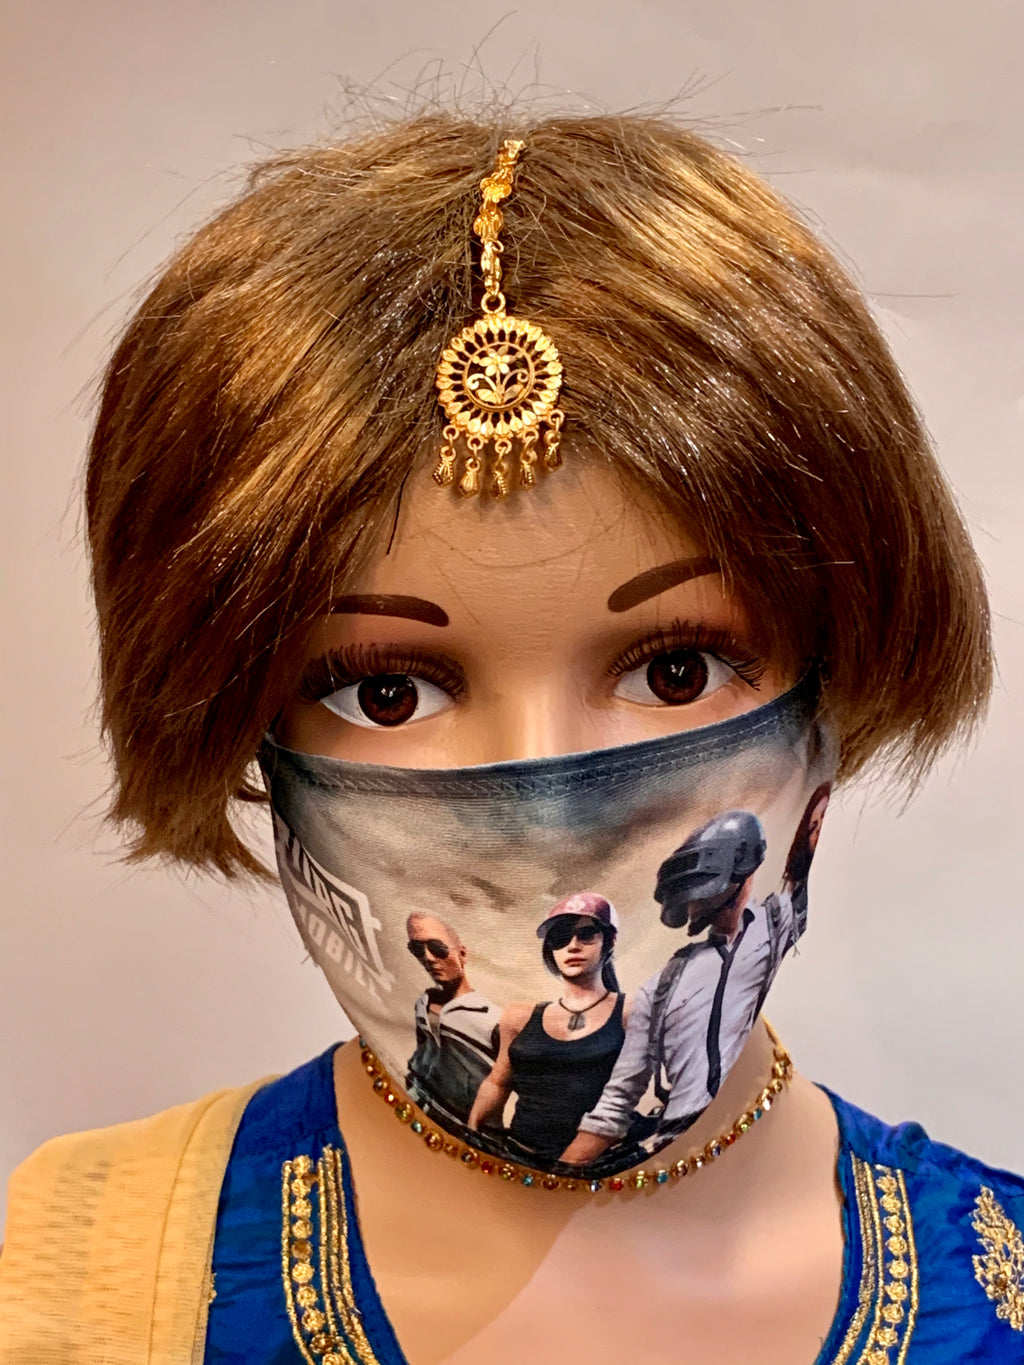 Children's Unisex PUBG Mobile Characters Digital Printed Cloth Face Masks